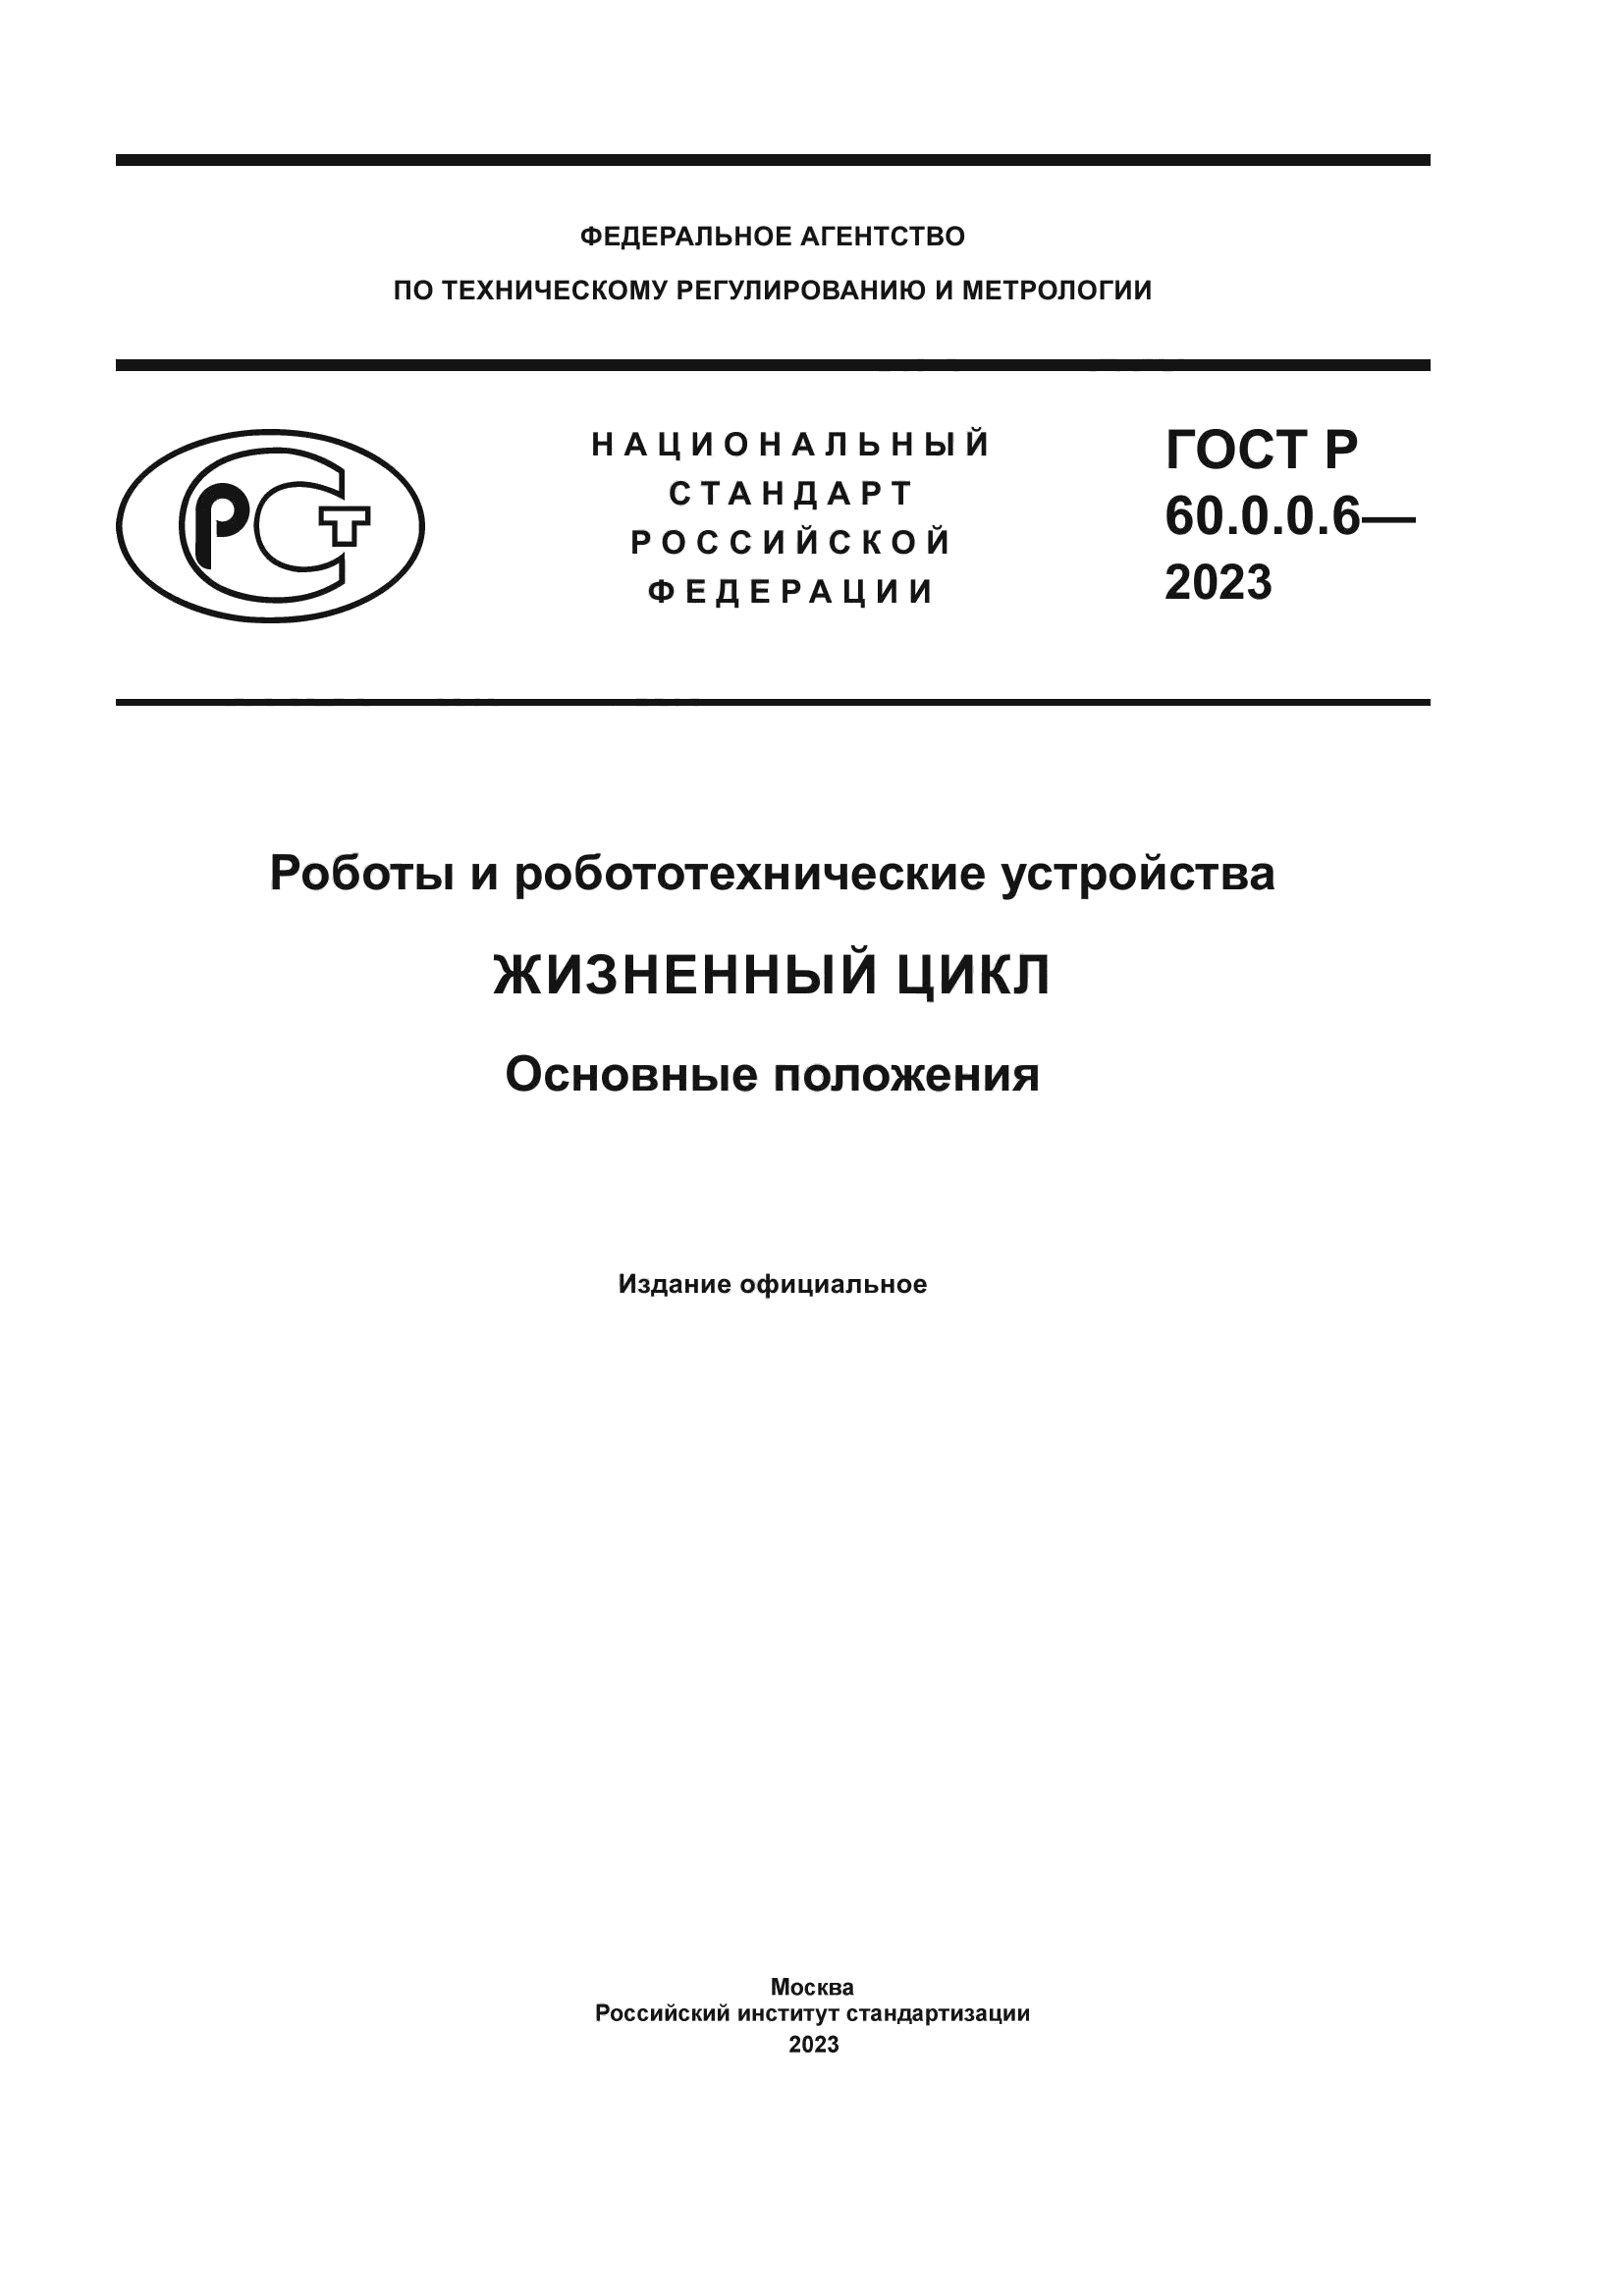 ГОСТ Р 60.0.0.6-2023